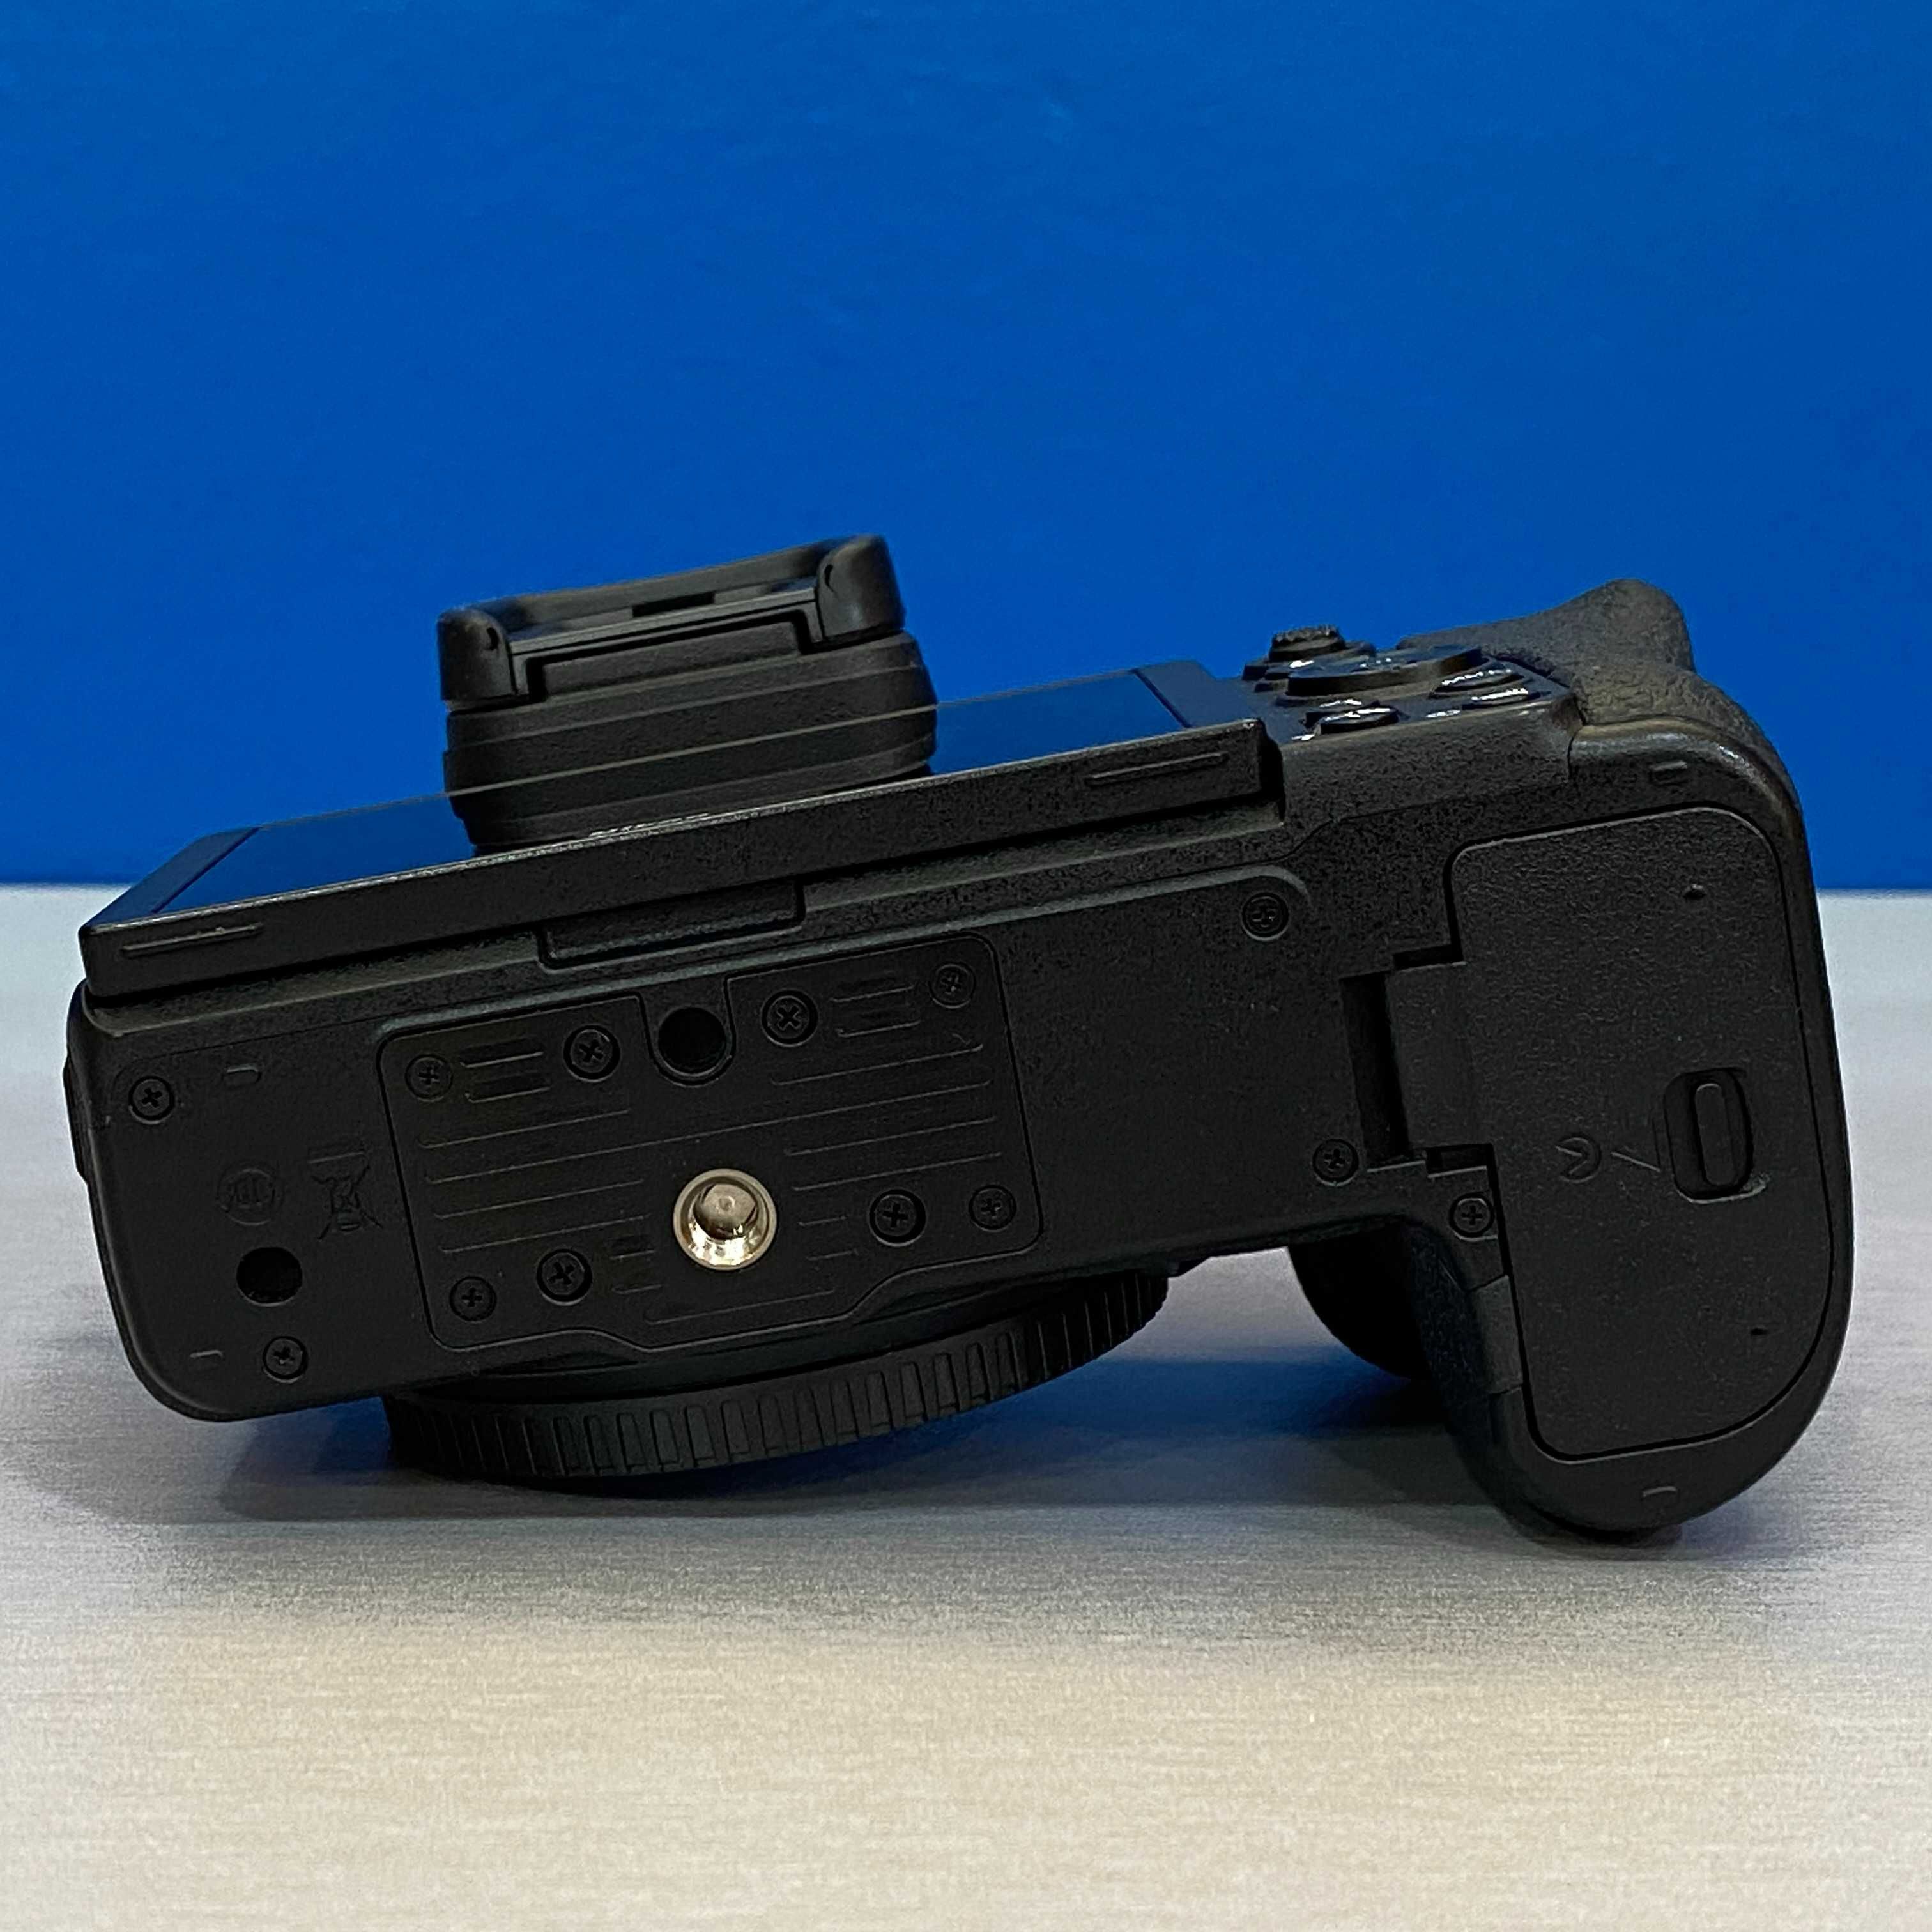 Nikon Z7 II (Corpo) - 45.7MP